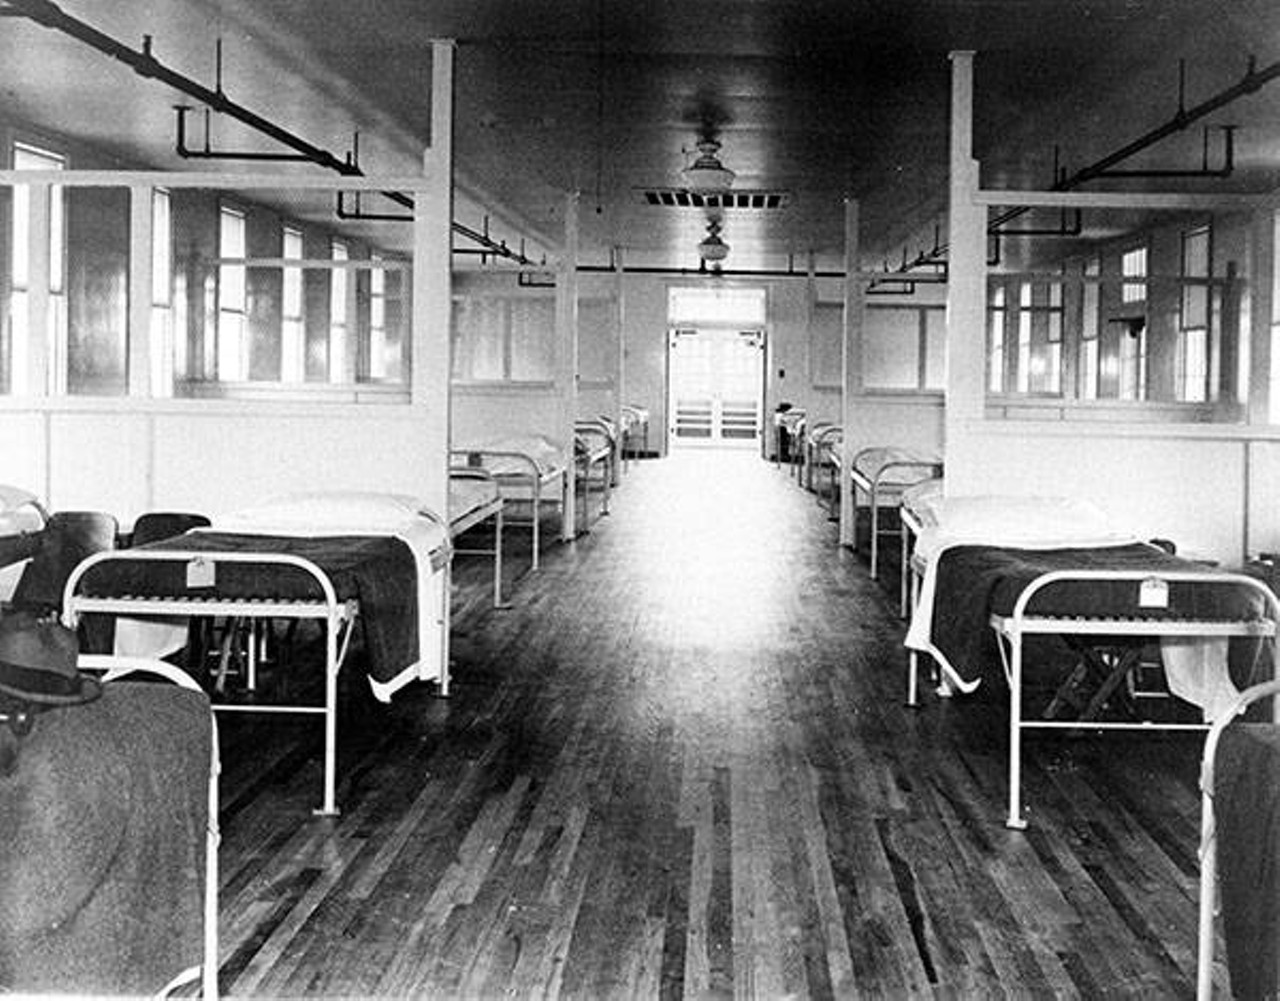  Patient Ward, Crile Hospital, 1944 